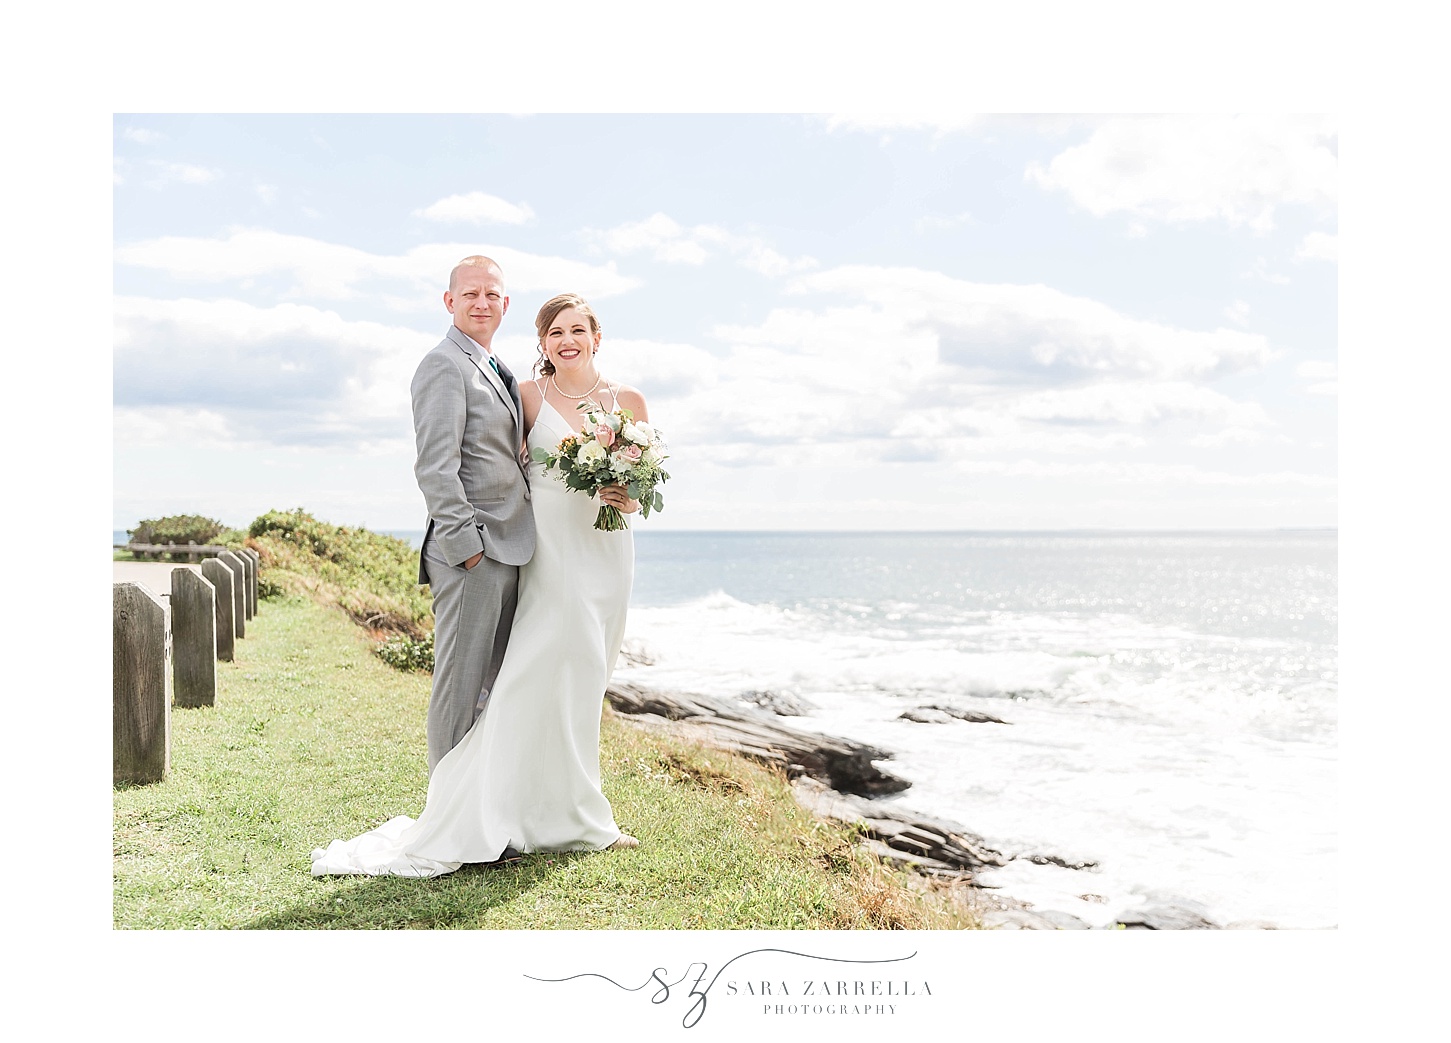 Sara Zarrella Photography captures bride and groom at Brenton Point along water